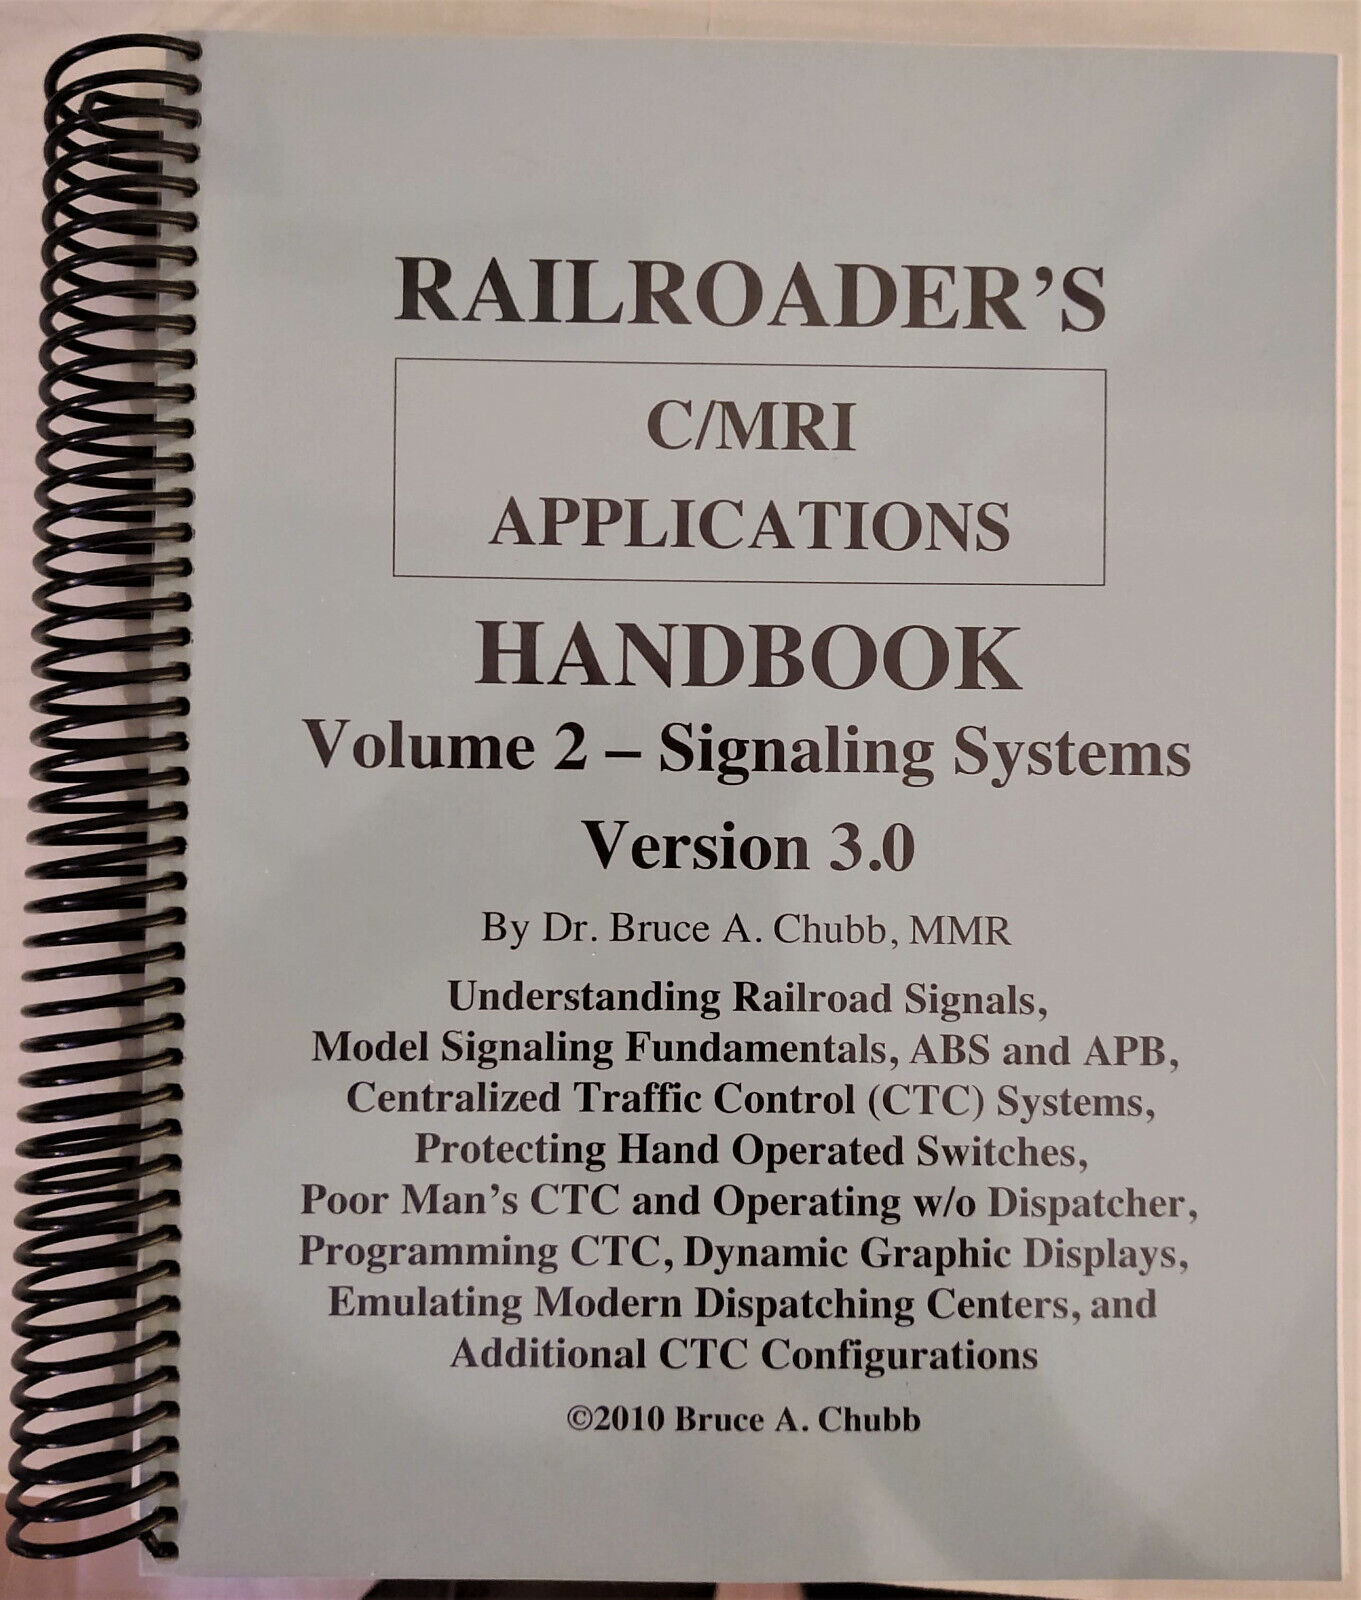 RAILROADER'S HANDBOOK (C/MRI Applications) Volume 2 Signaling Systems 2010